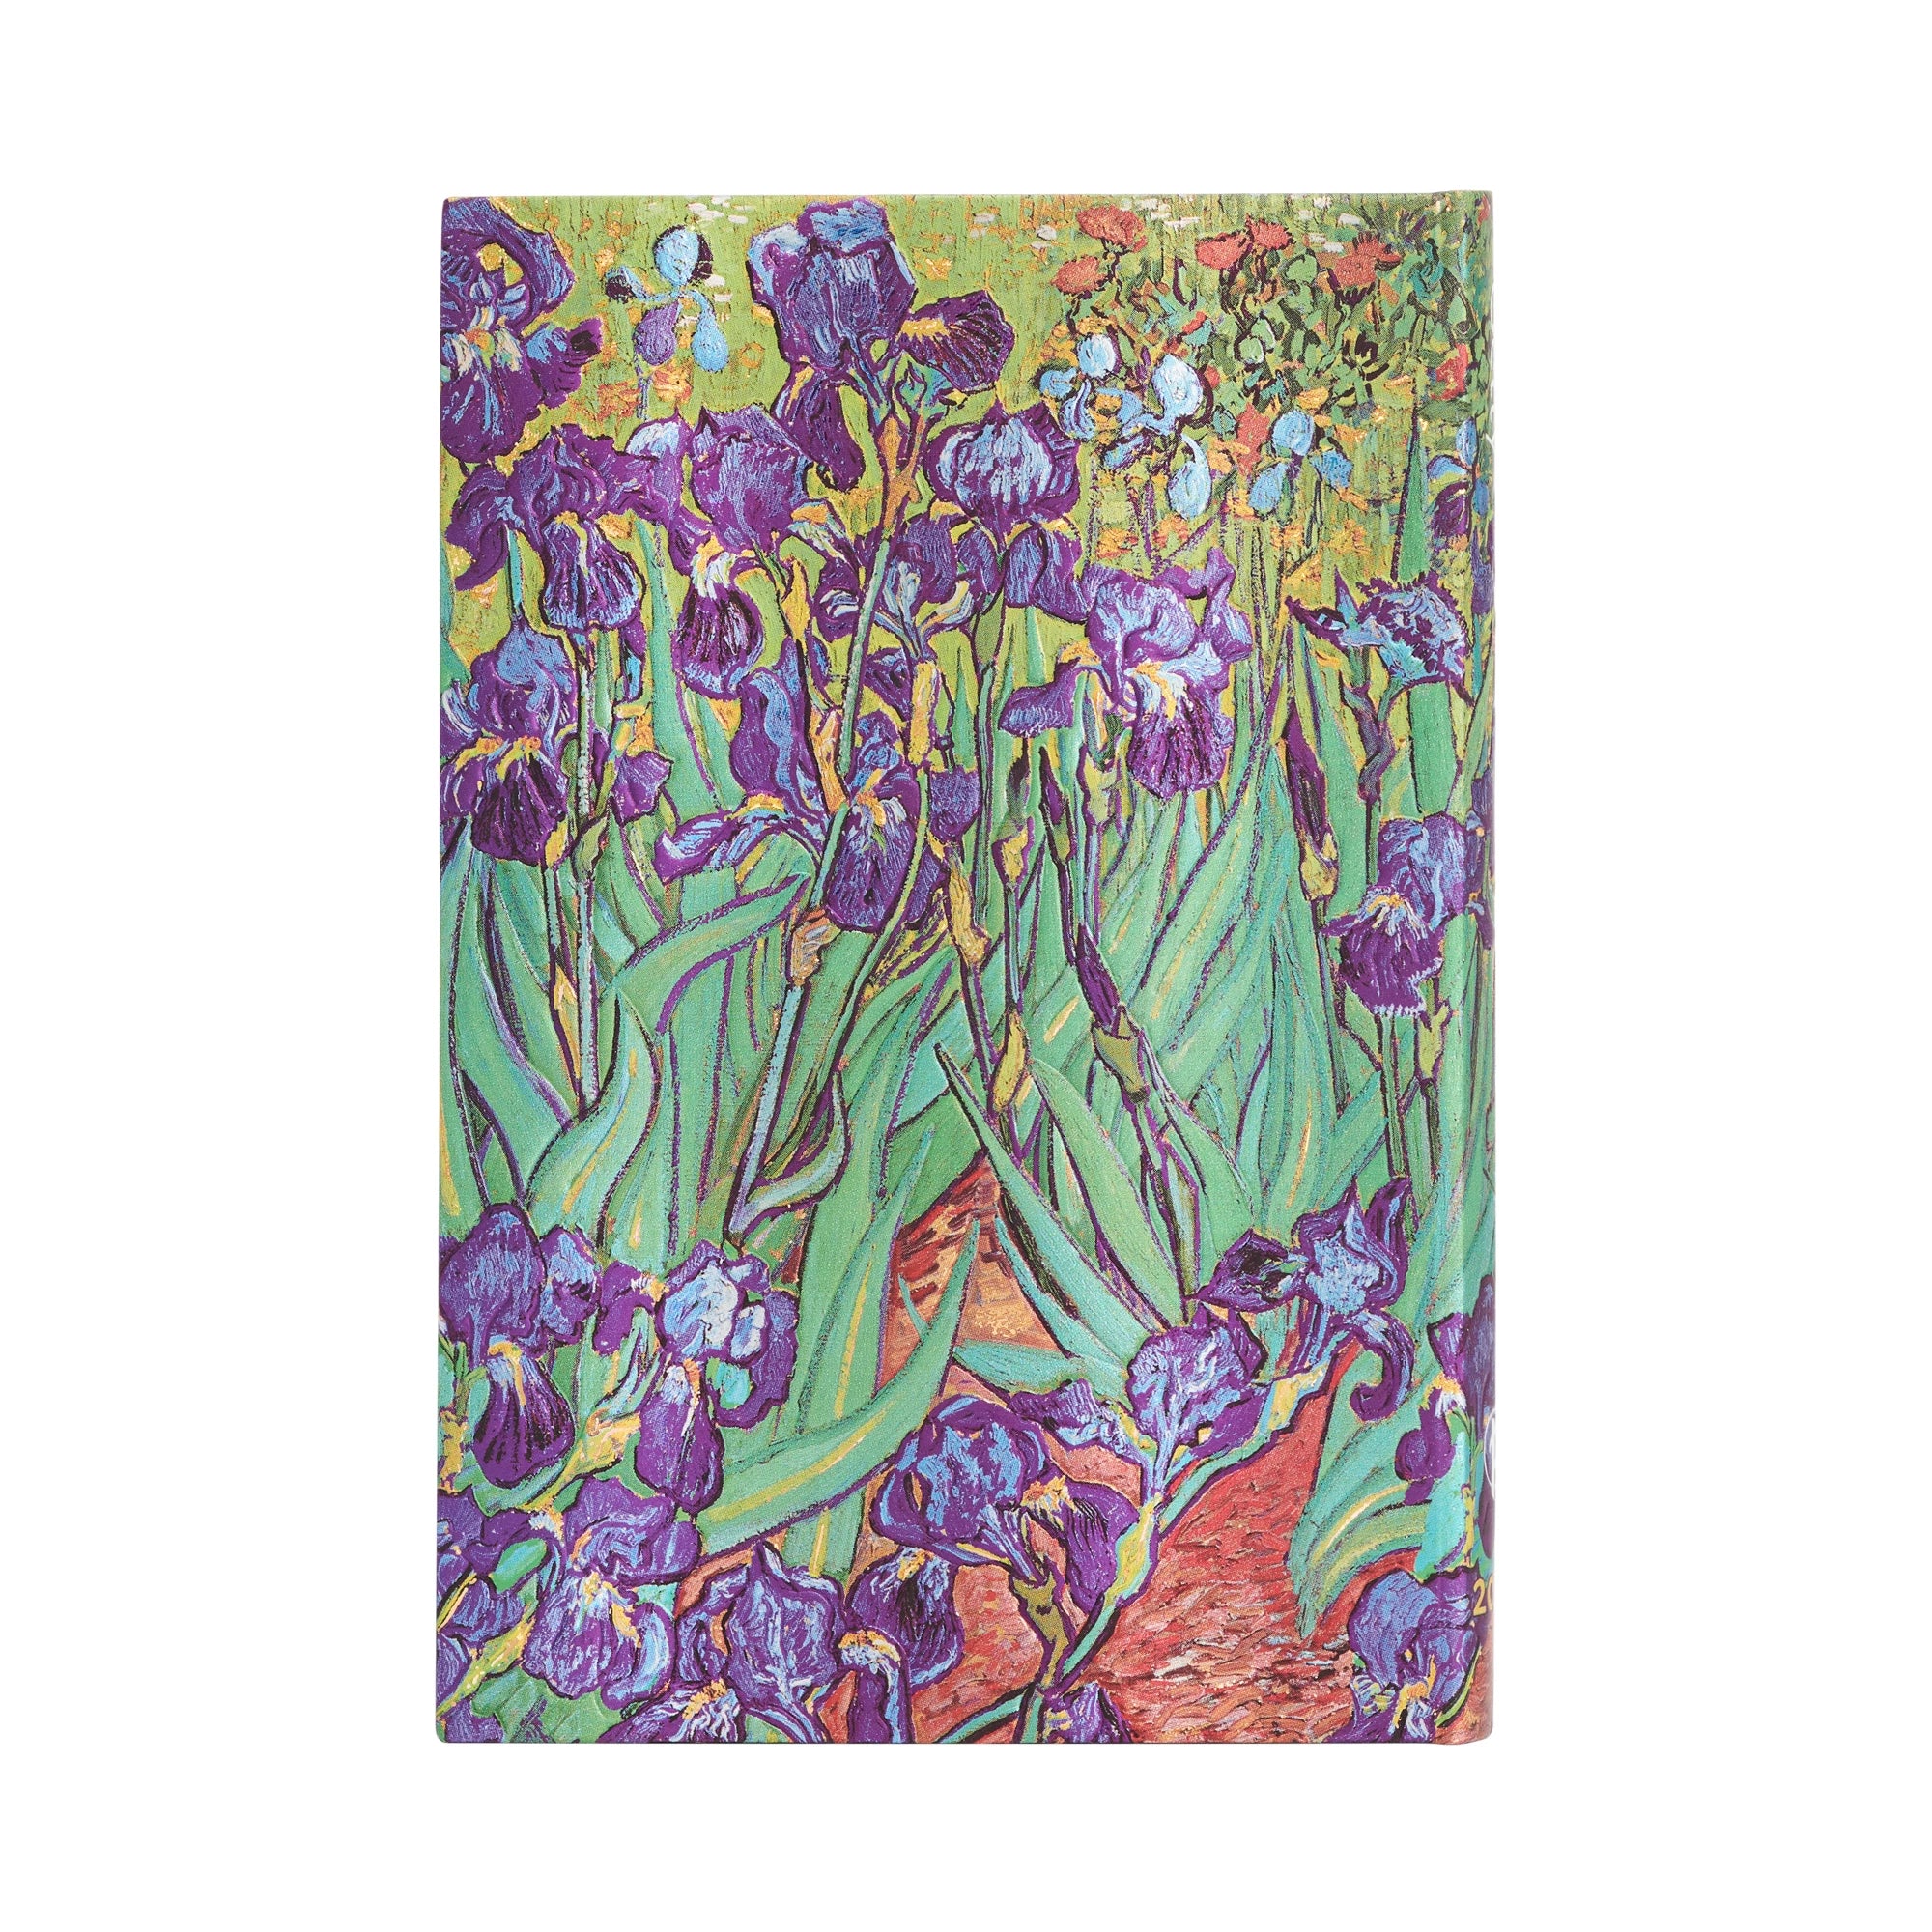 Paperblanks 2024 diary hardcover mini van Gogh's Irises